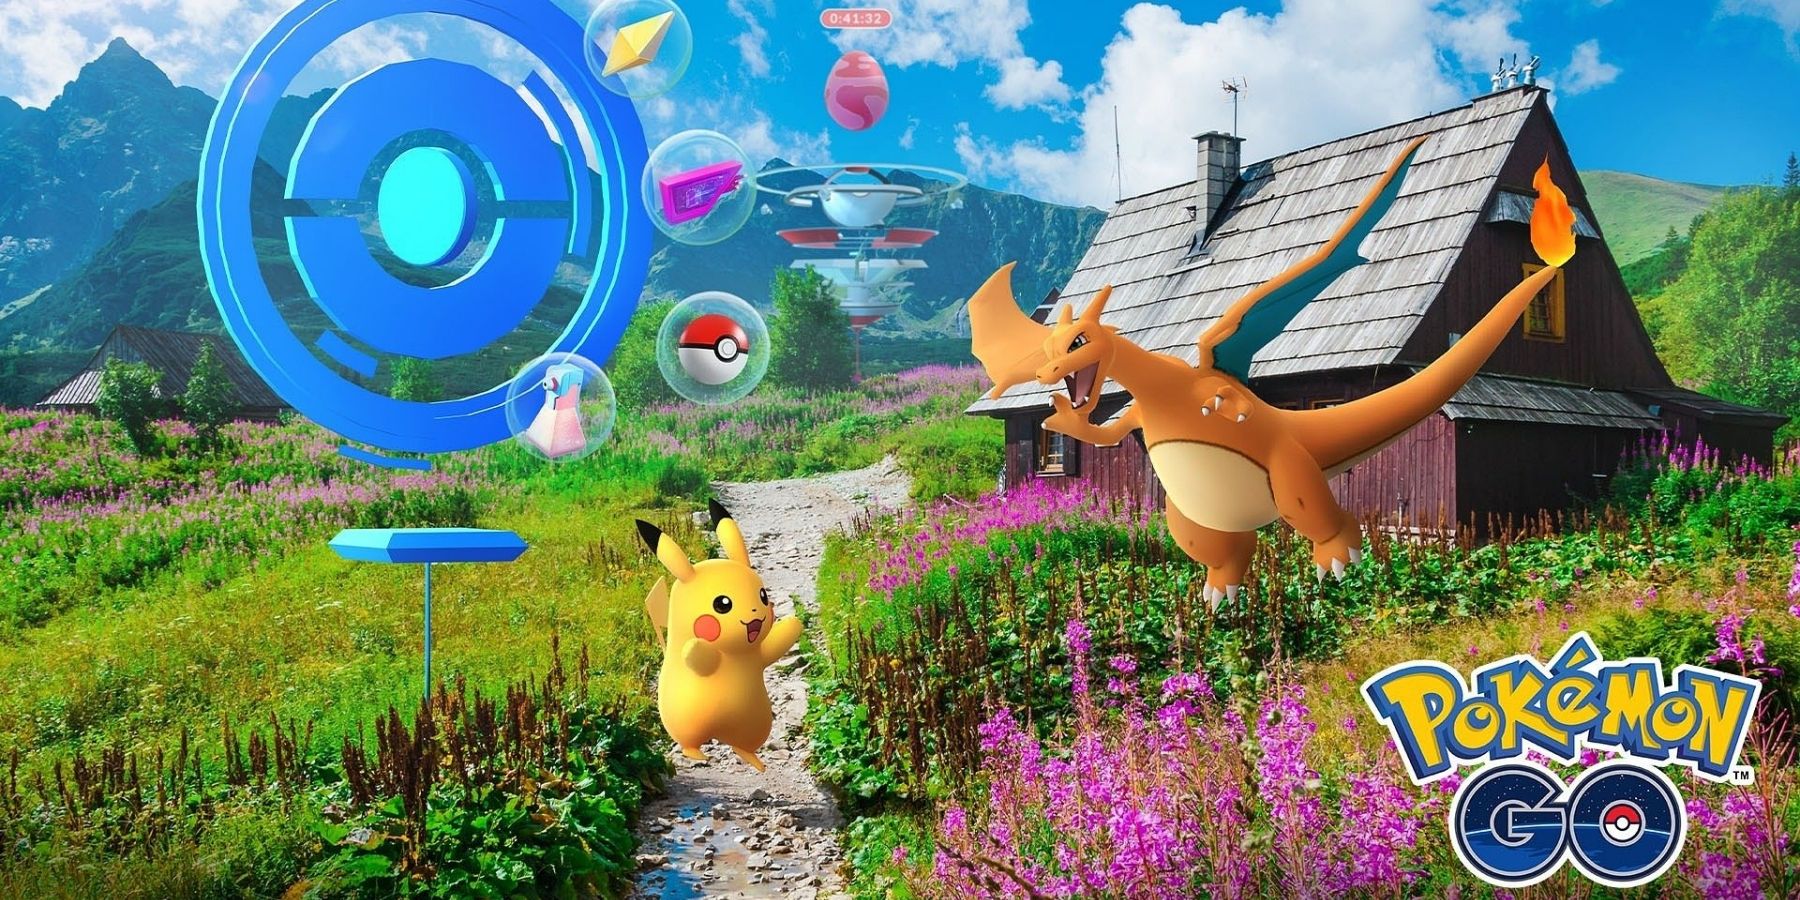 The monetization promise and pitfalls of Pokémon Go